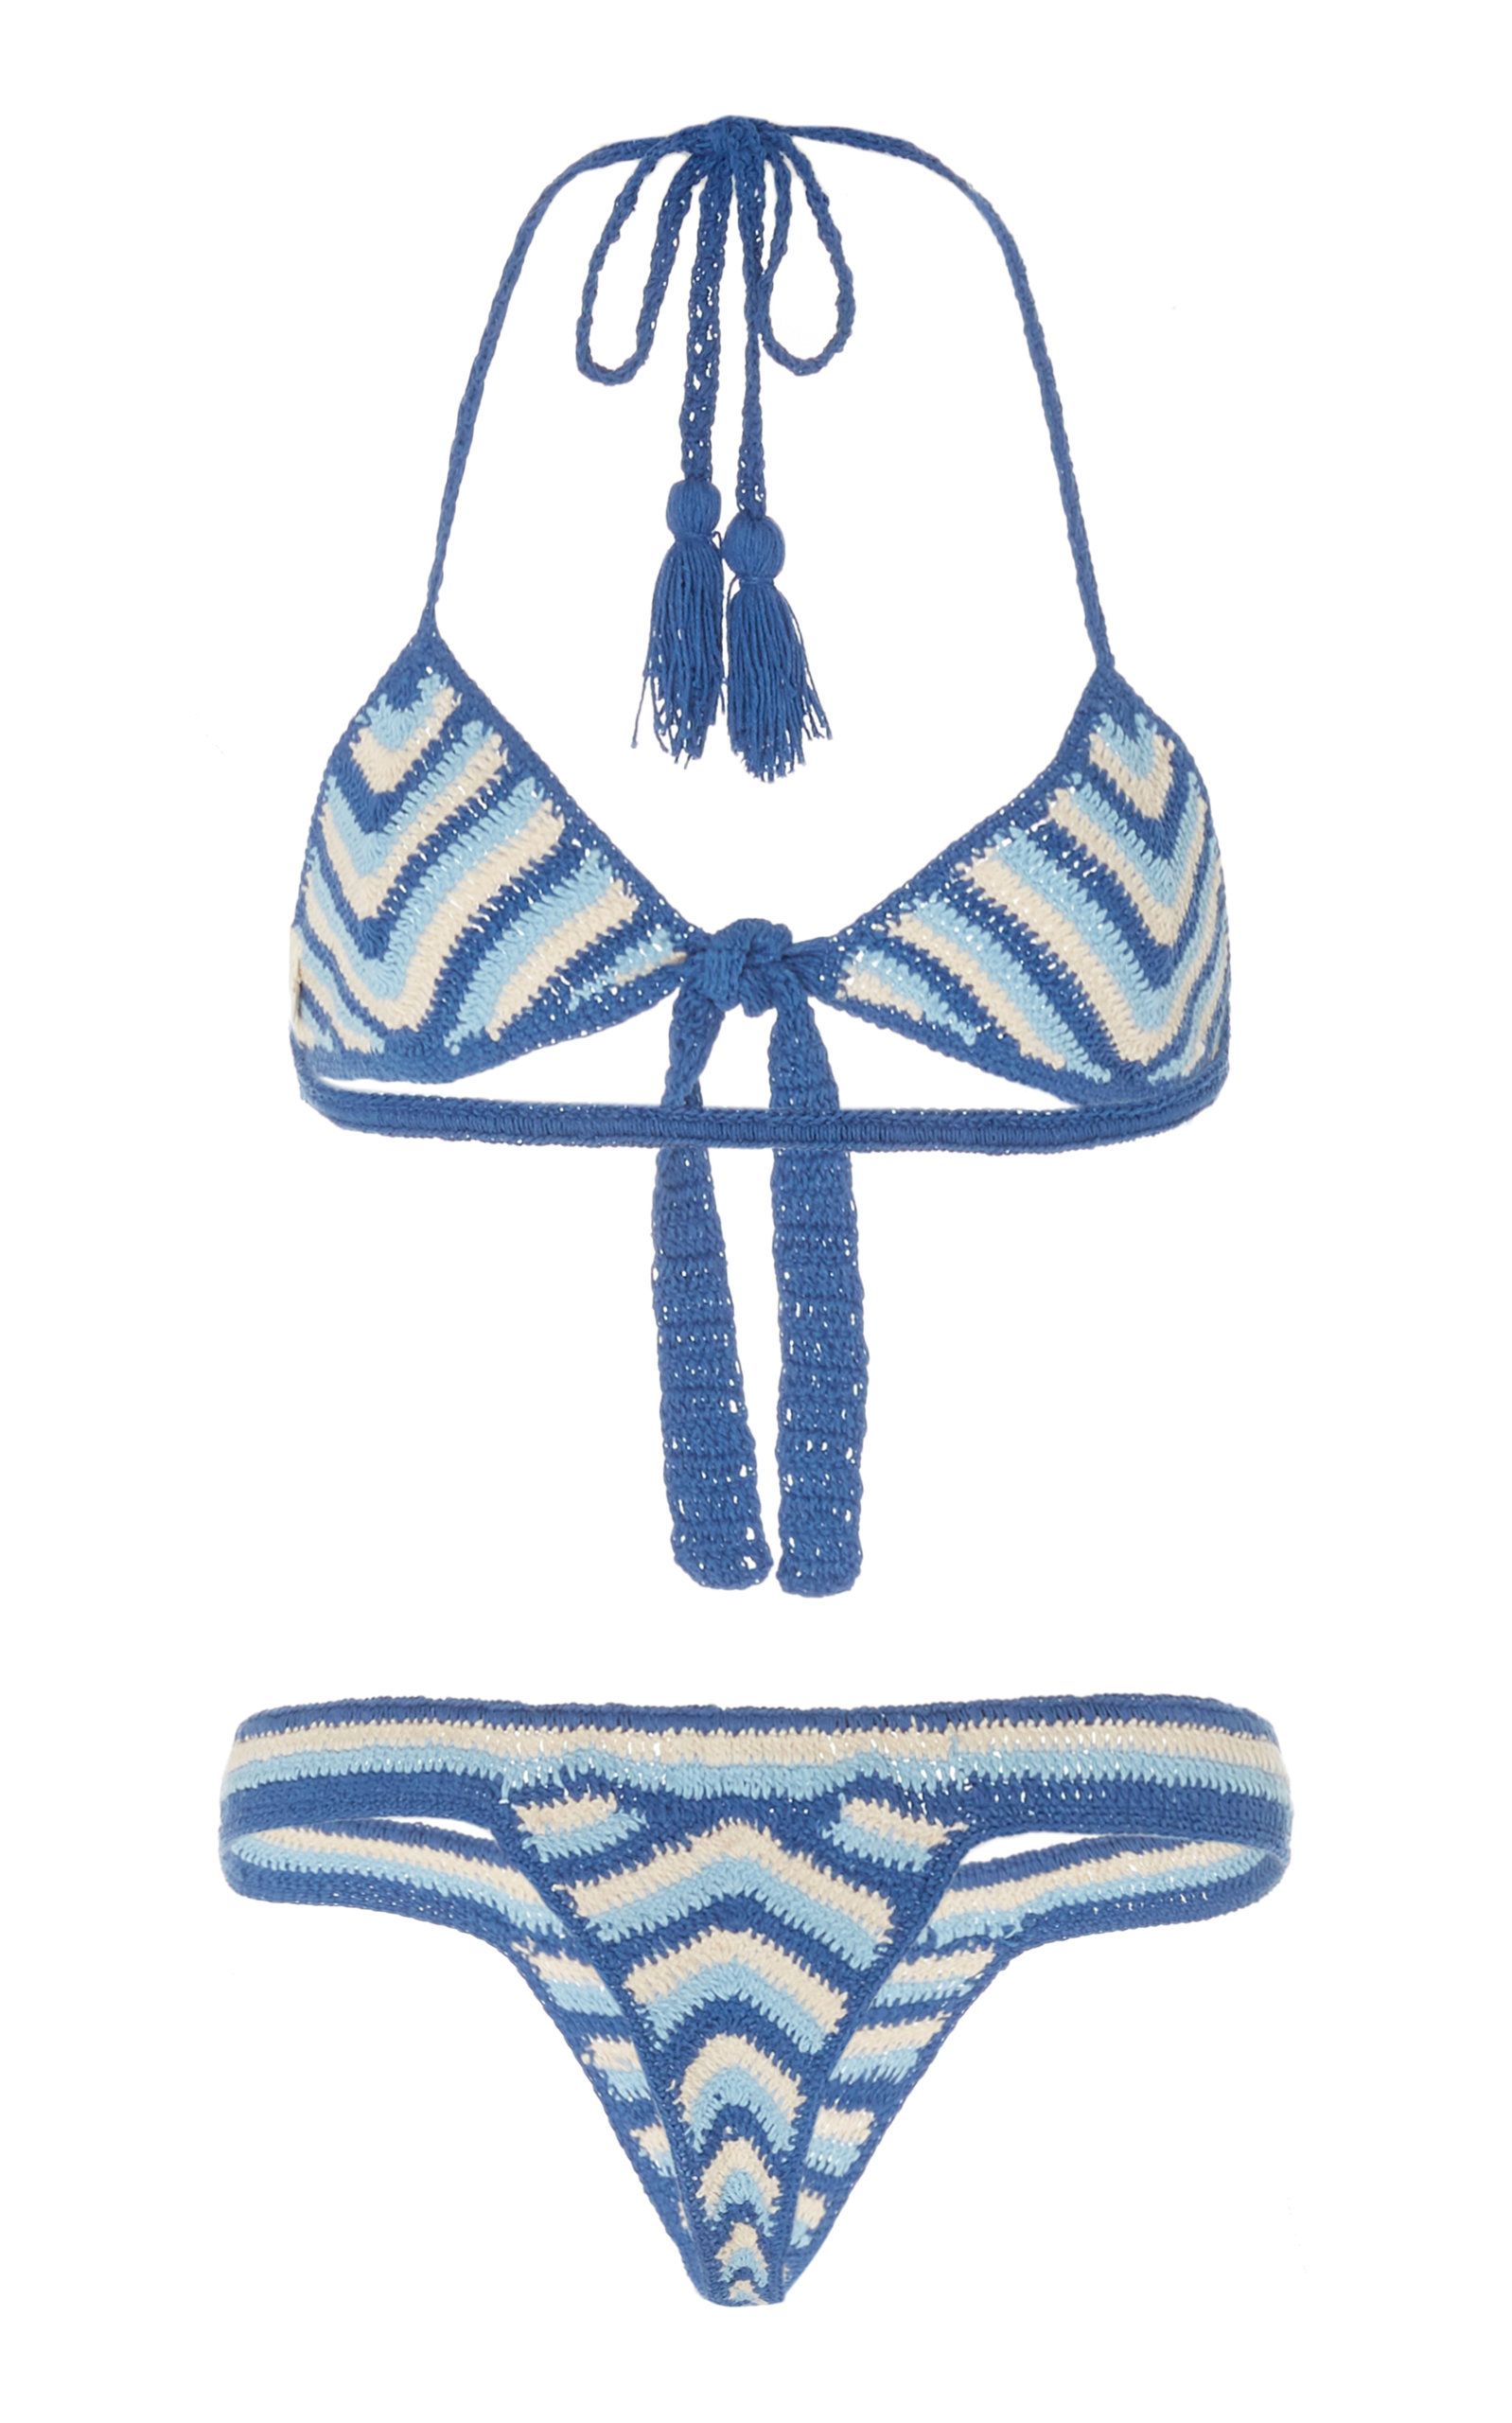 https://hips.hearstapps.com/vader-prod.s3.amazonaws.com/1590599430-large_akoia-swim-blue-iris-crocheted-cotton-bikini-set.jpg